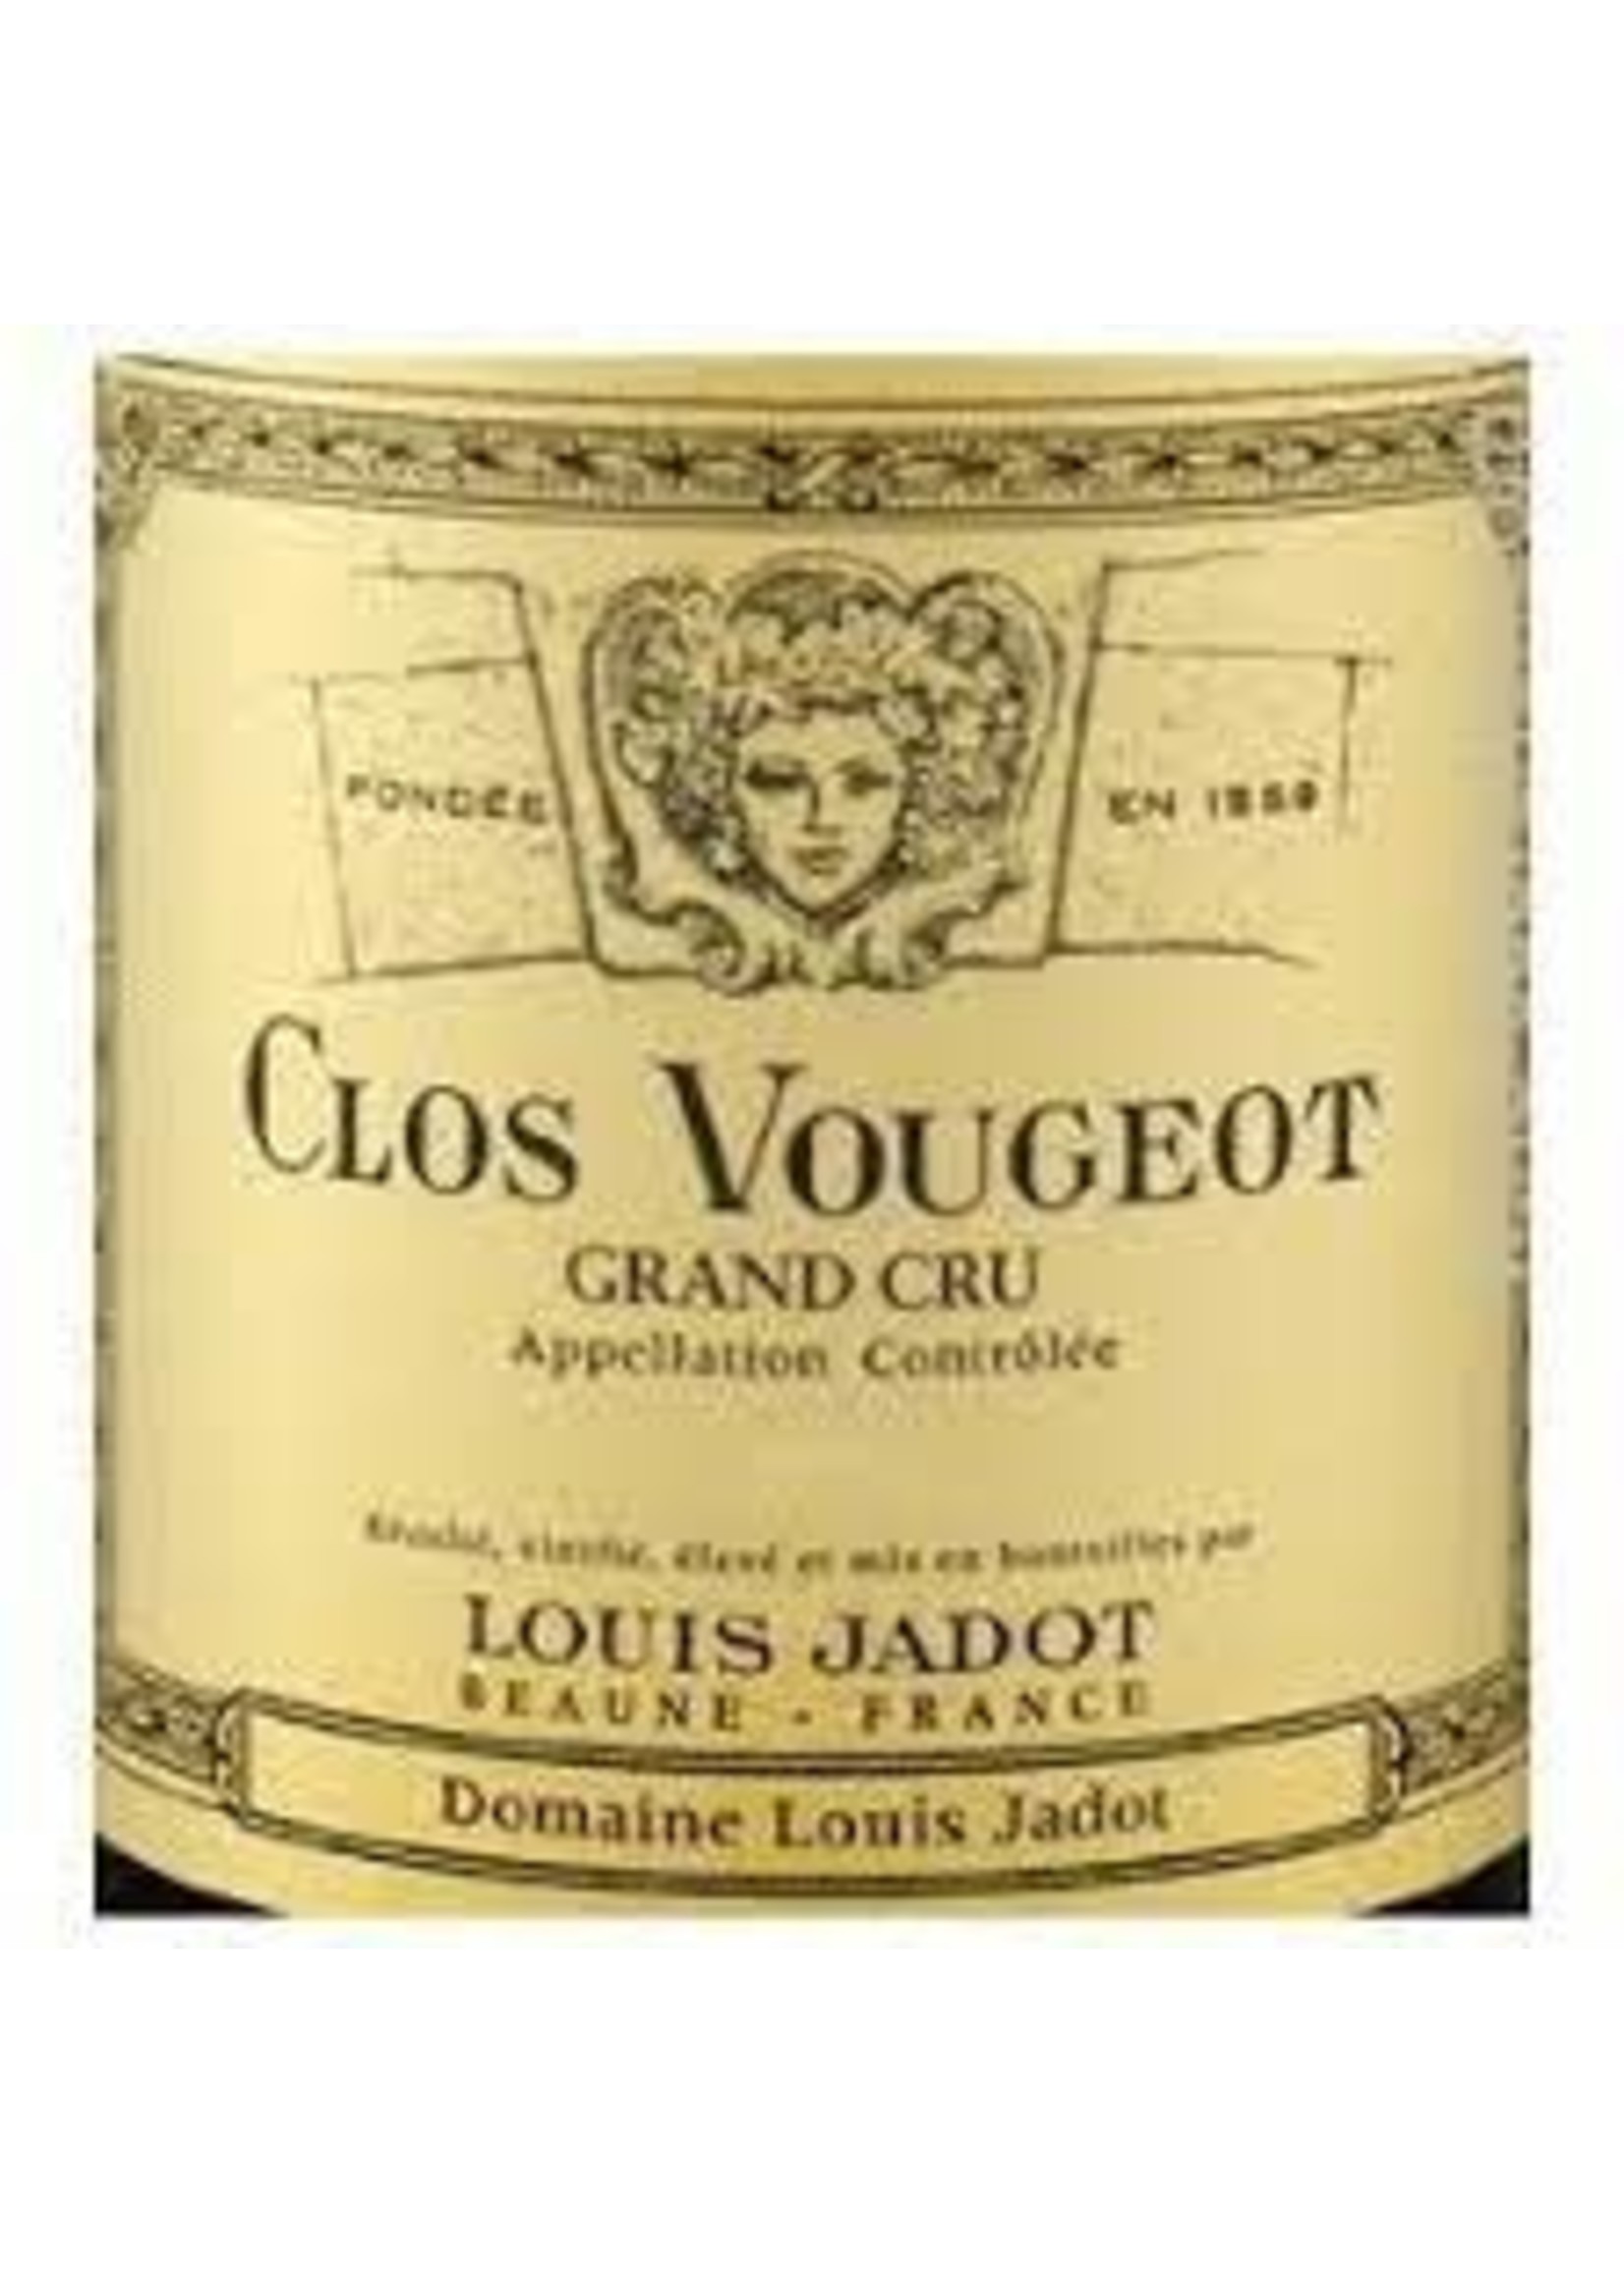 Louis Jadot 2019 Clos Vougeot Grand Cru 750ml